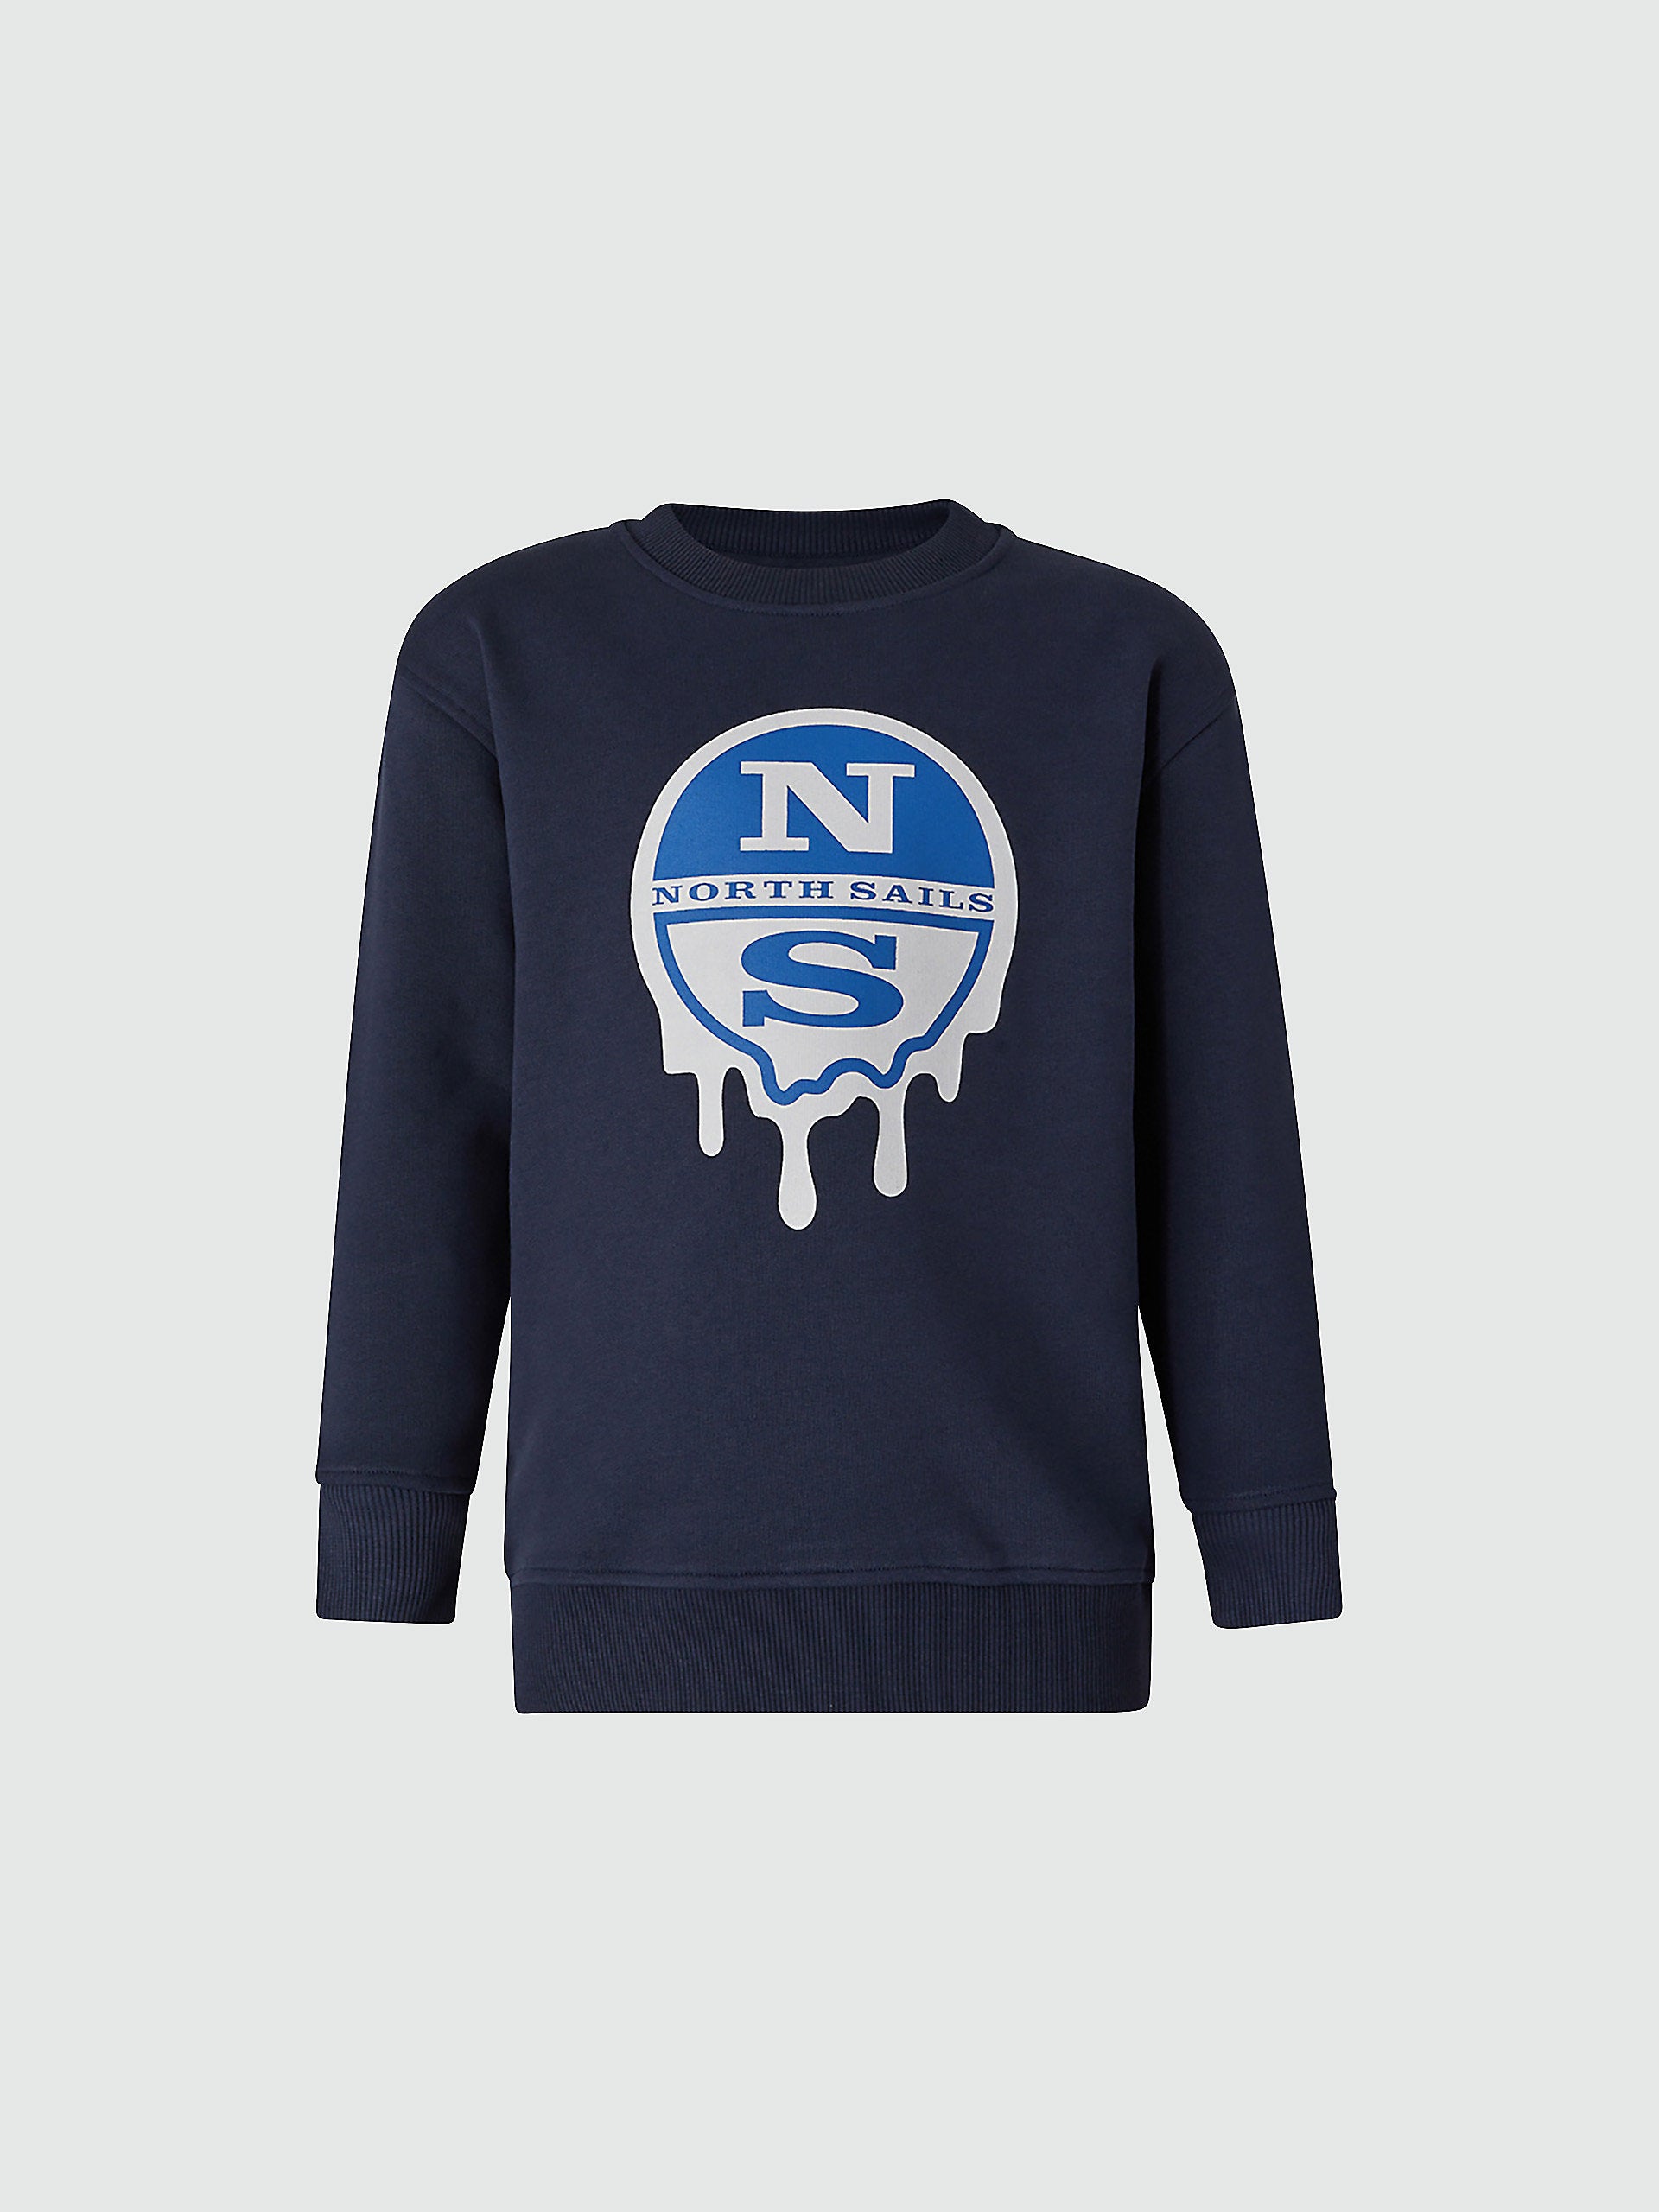 North Sails - Sweatshirt with maxi logoNorth SailsNavy blue8